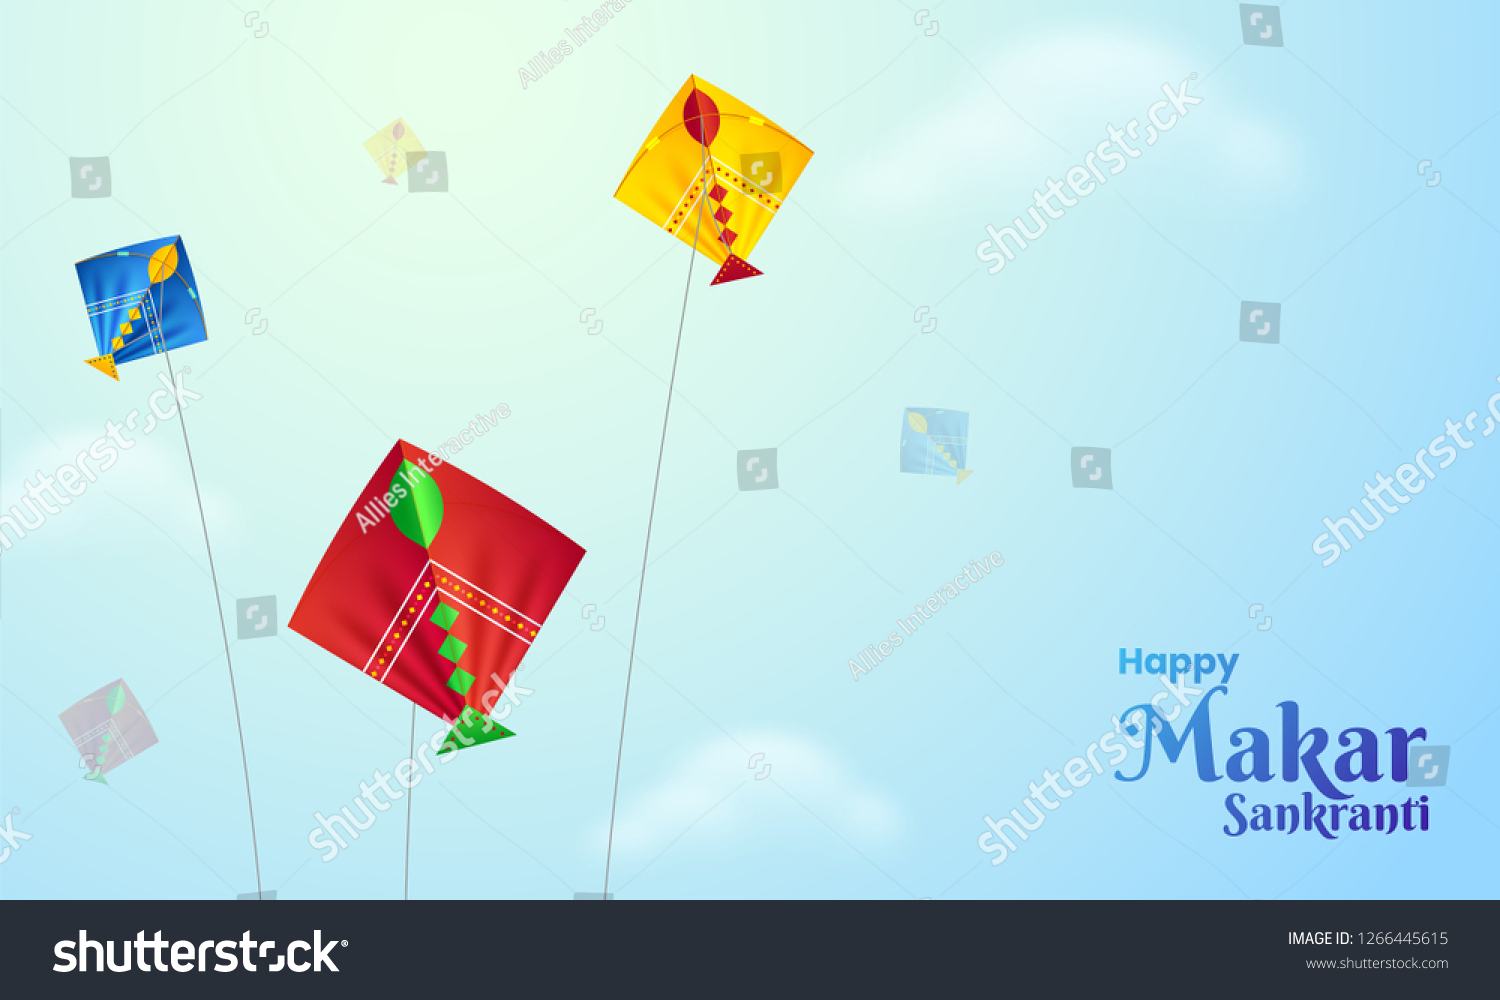 SVG of Happy Makar Sankranti poster design with illustration of colorful kites flying sunny weather background. svg